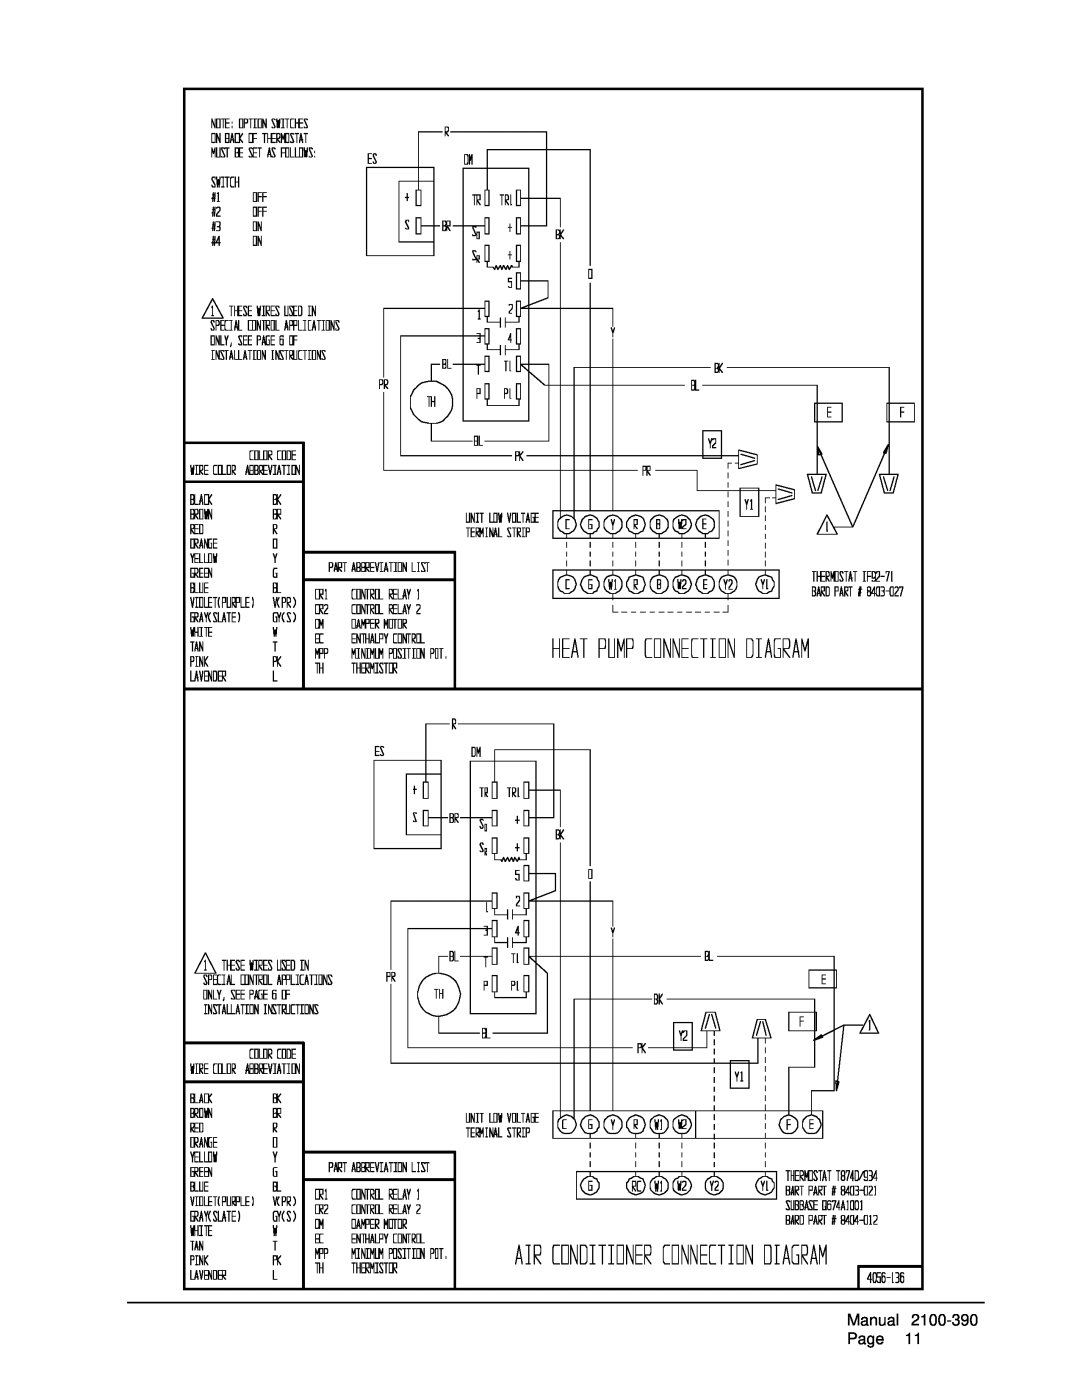 Bard EIFM-3B, EIFM-2B installation instructions Manual, 2100-390, Page 